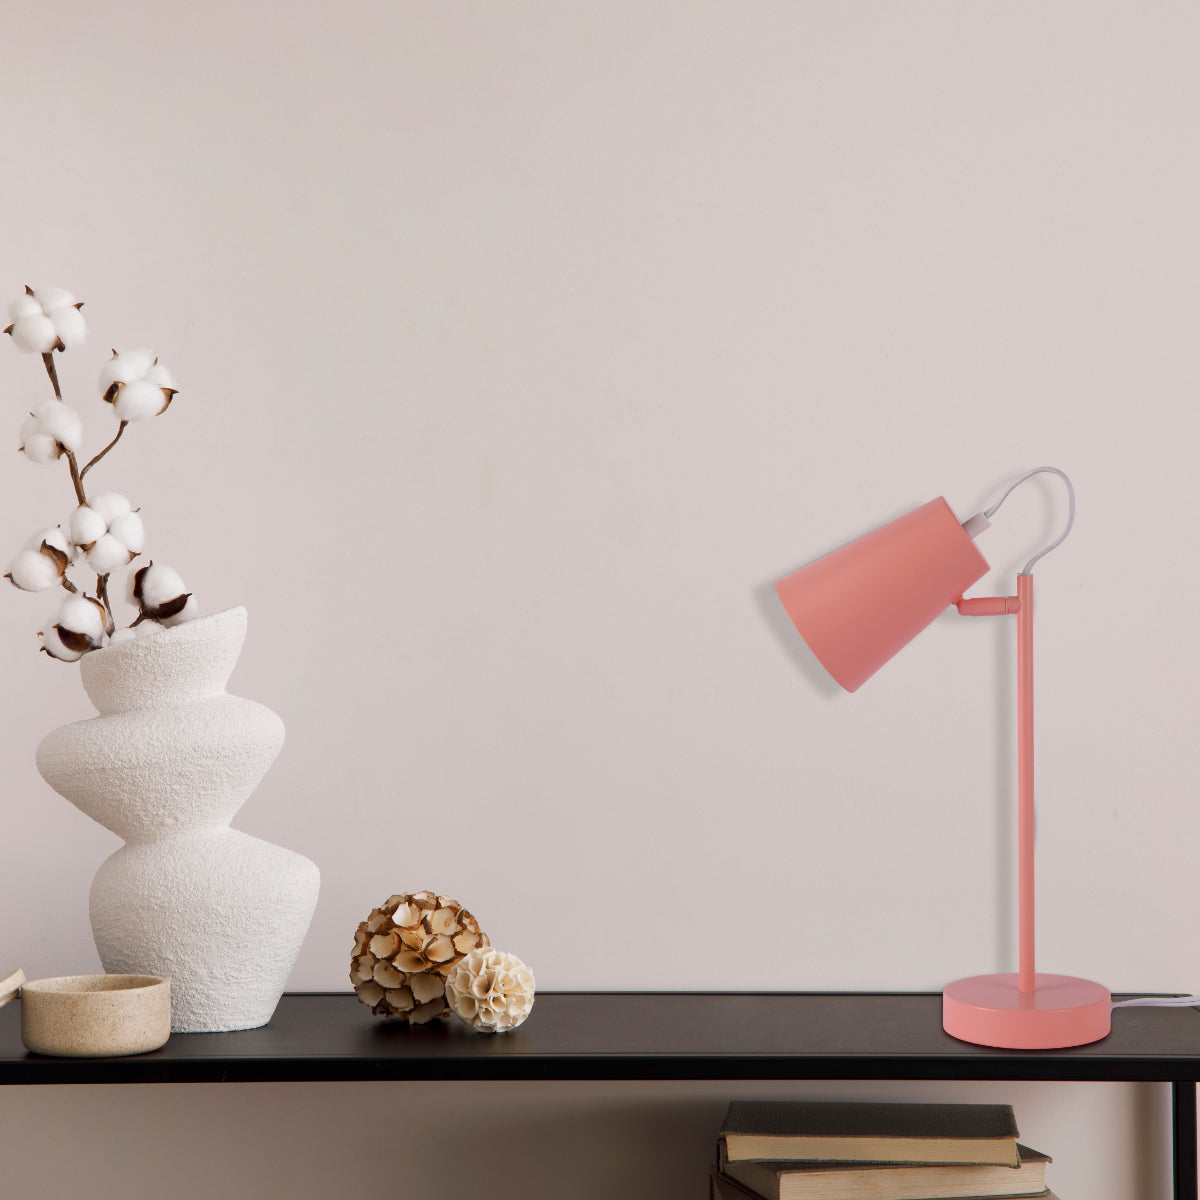 Sleek Cut Cone Desk Lamp in Vibrant Colors - Modern Elegance 130-03668 in play